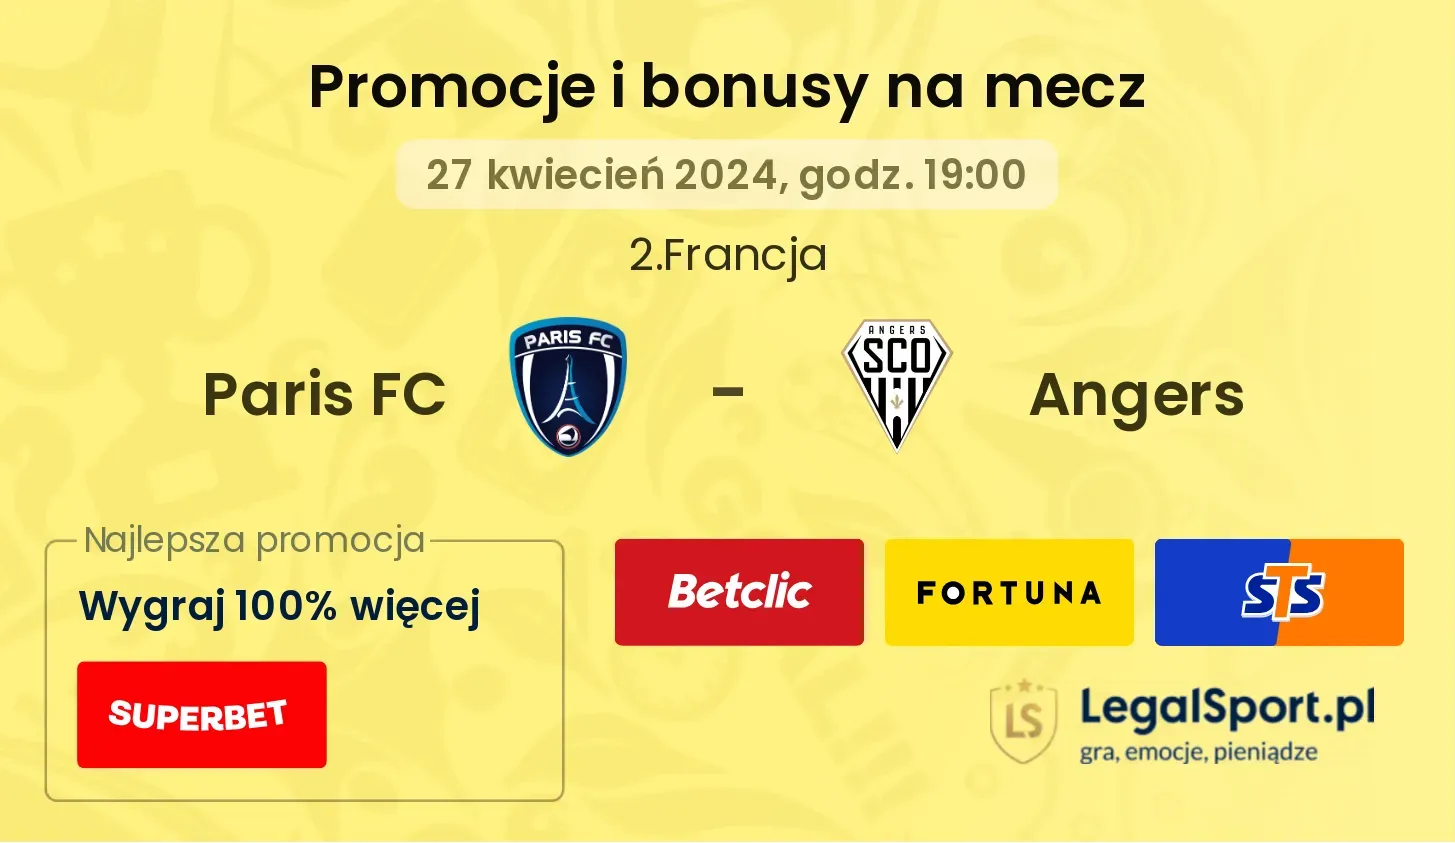 Paris FC - Angers promocje bonusy na mecz